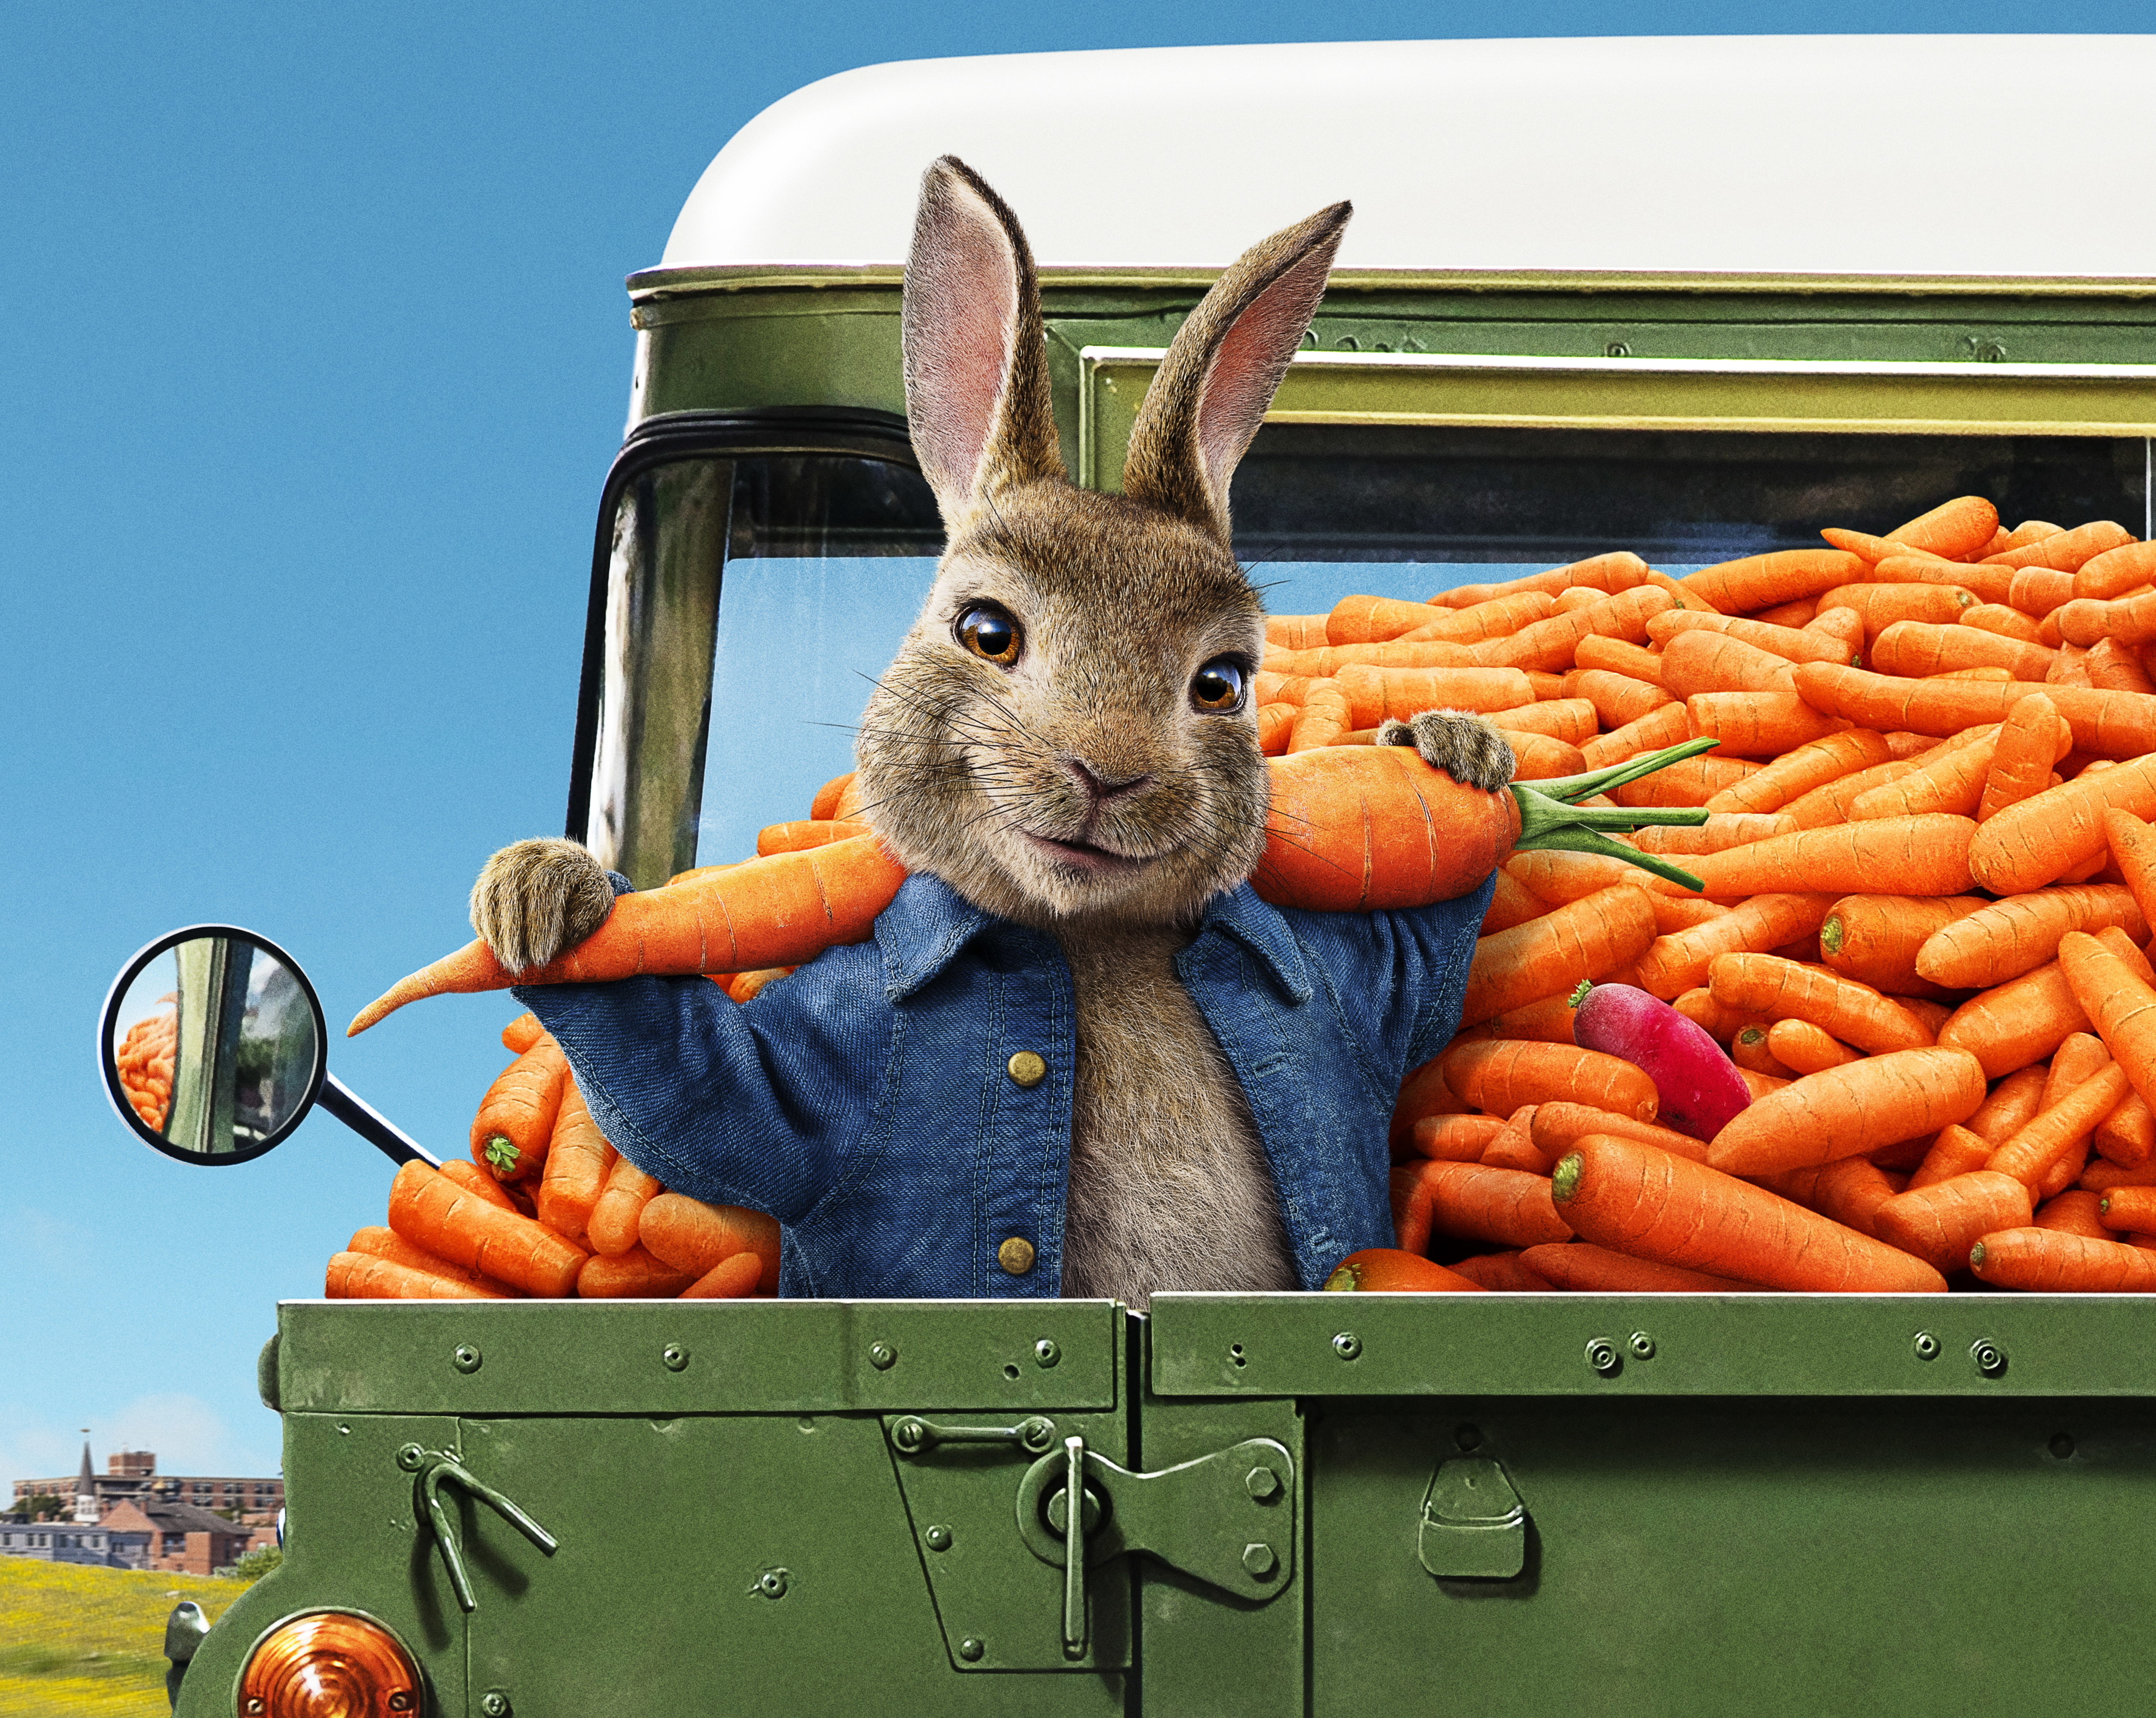 Los mejores fondos de pantalla de Peter Rabbit 2: A La Fuga para la pantalla del teléfono